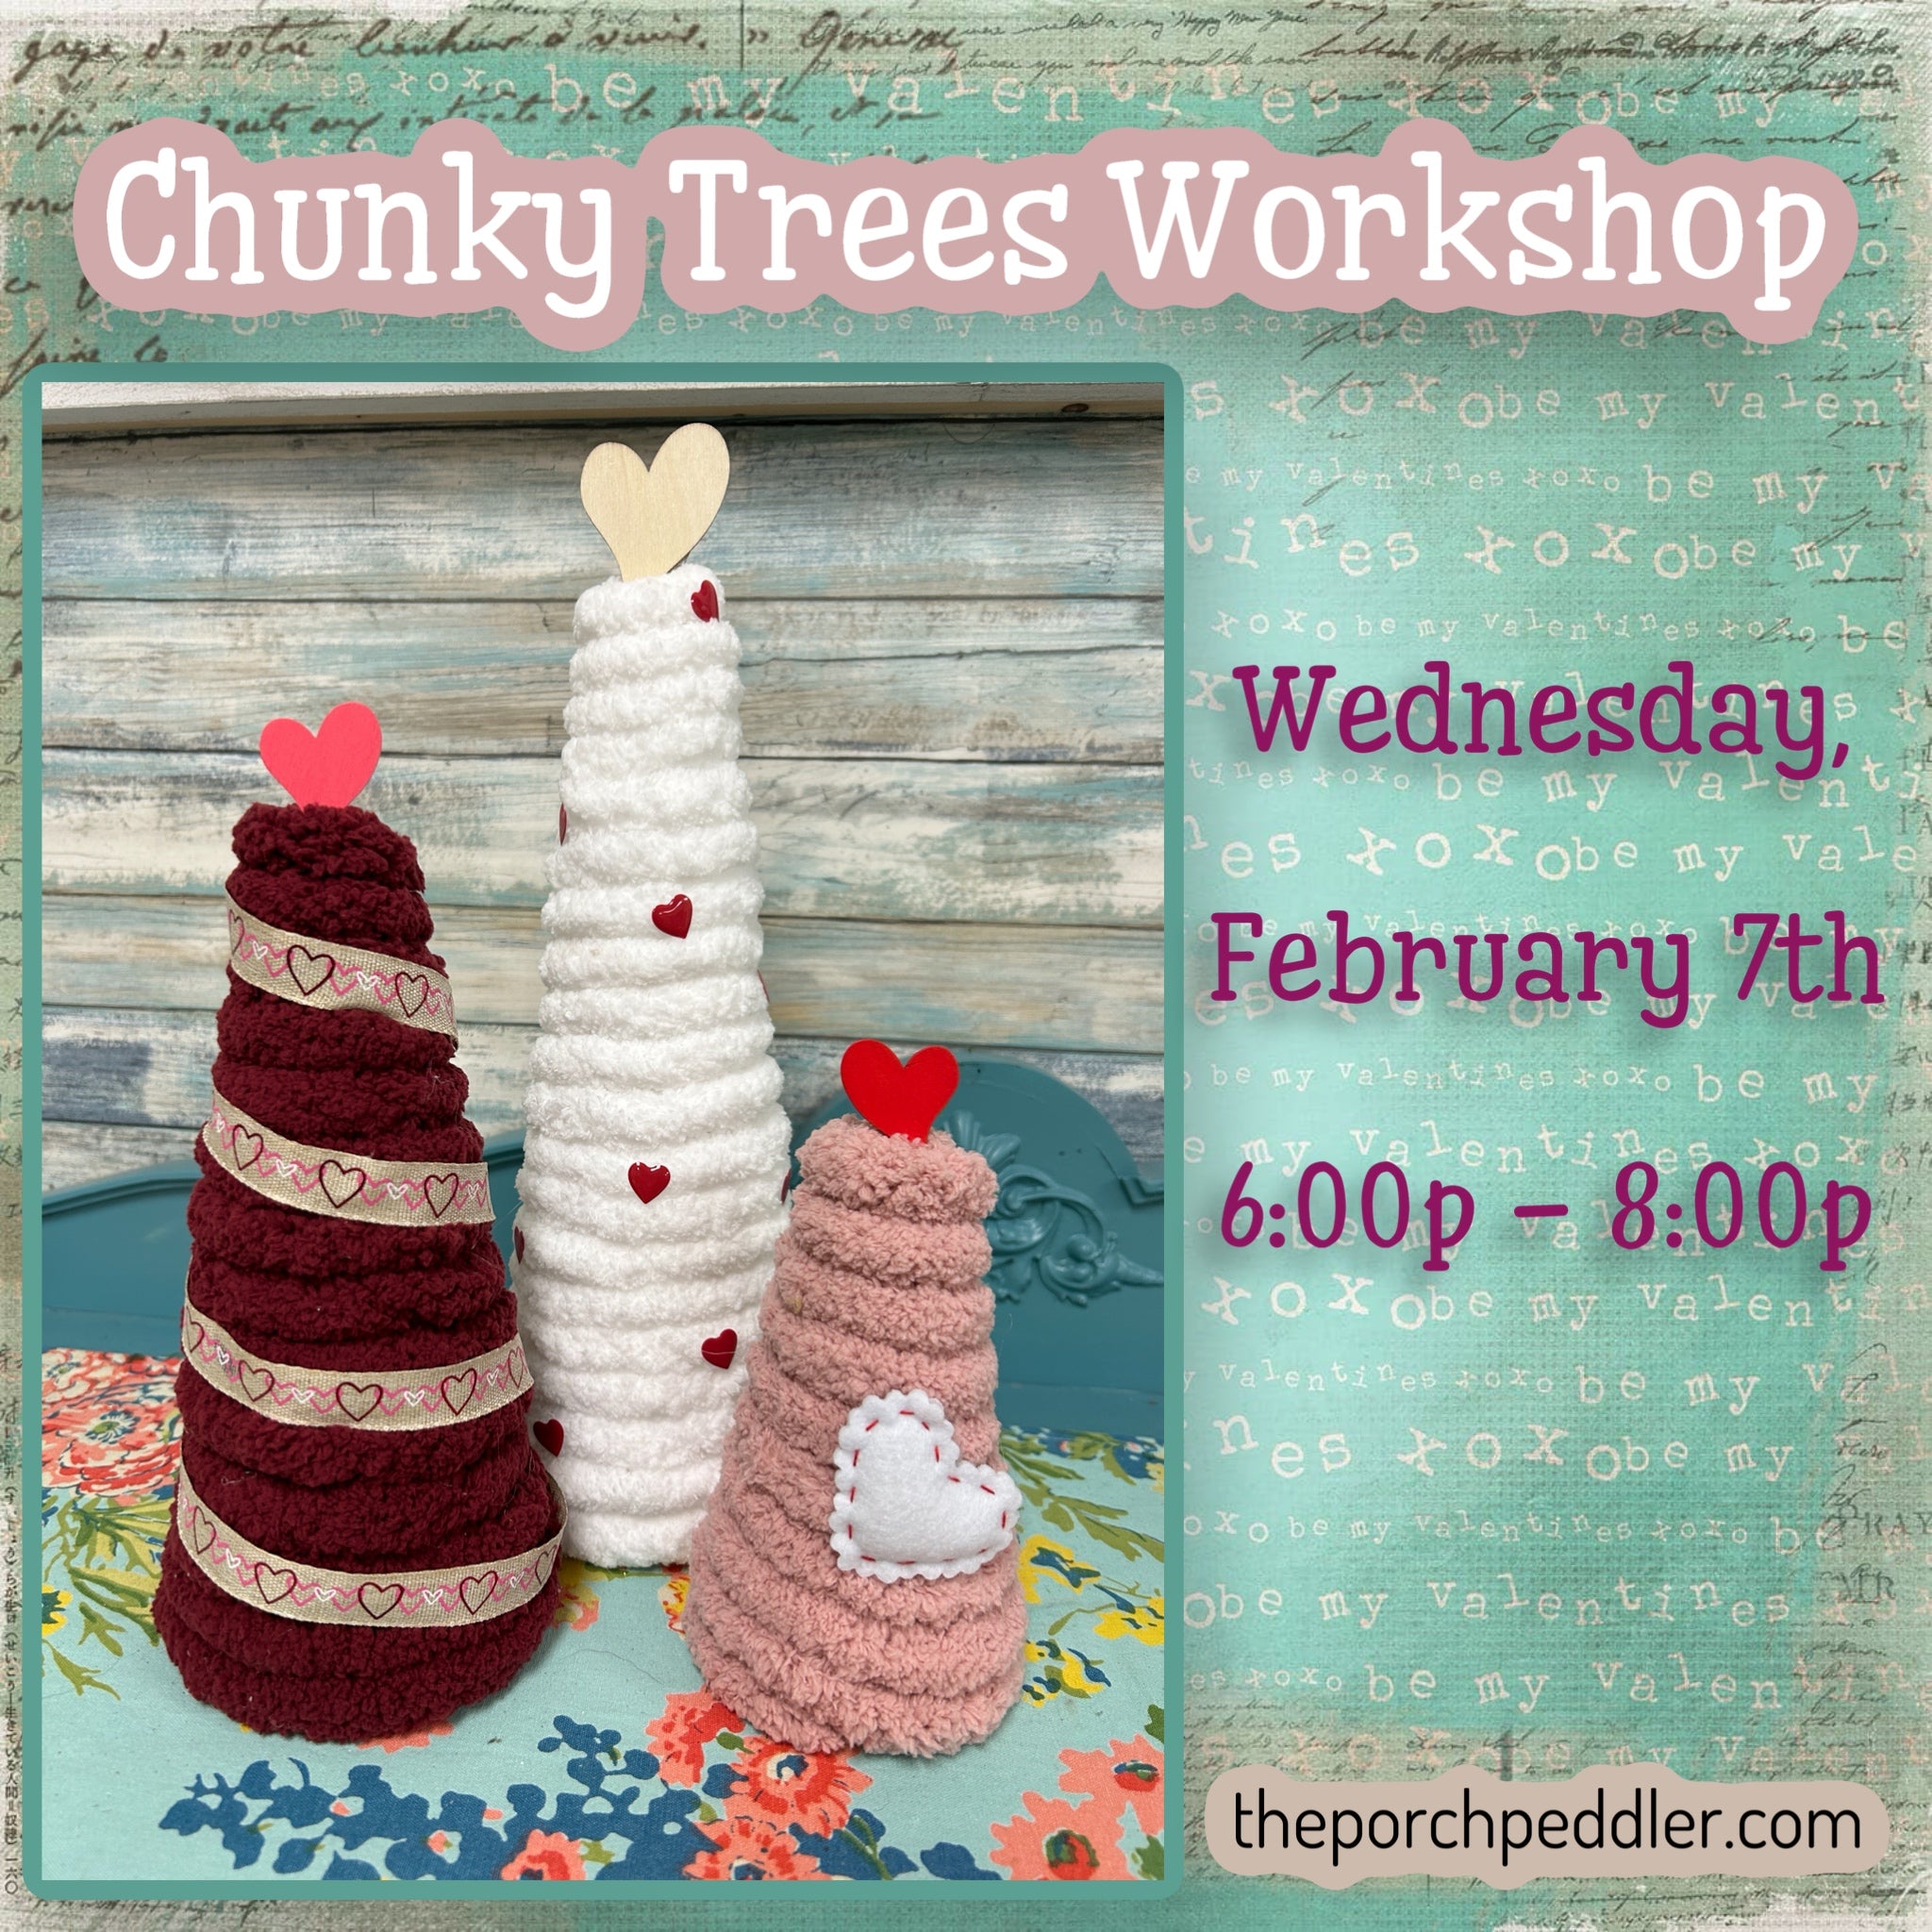 February 7th - Chunky Trees Workshop (6p-8p)